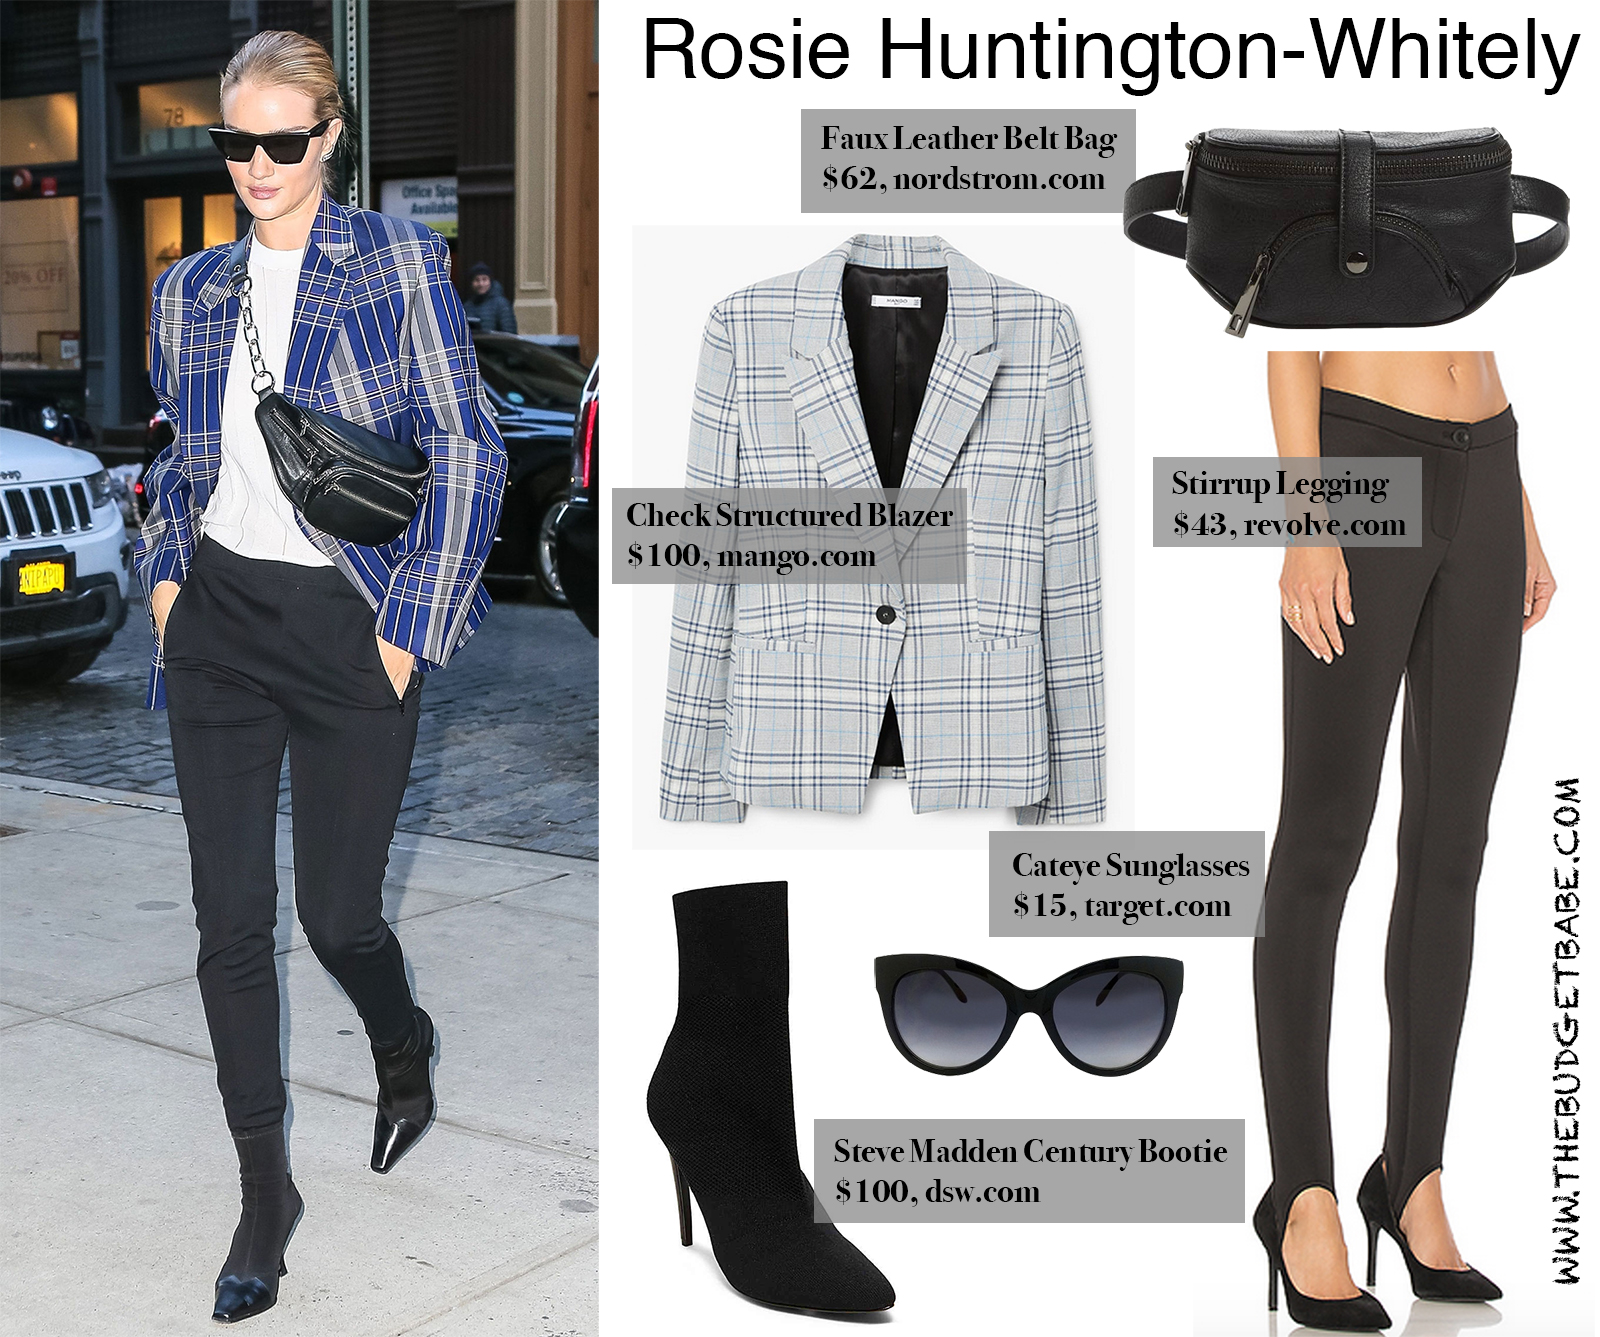 Rosie Huntington-Whitely Check Blazer and Belt Bag Look for Less